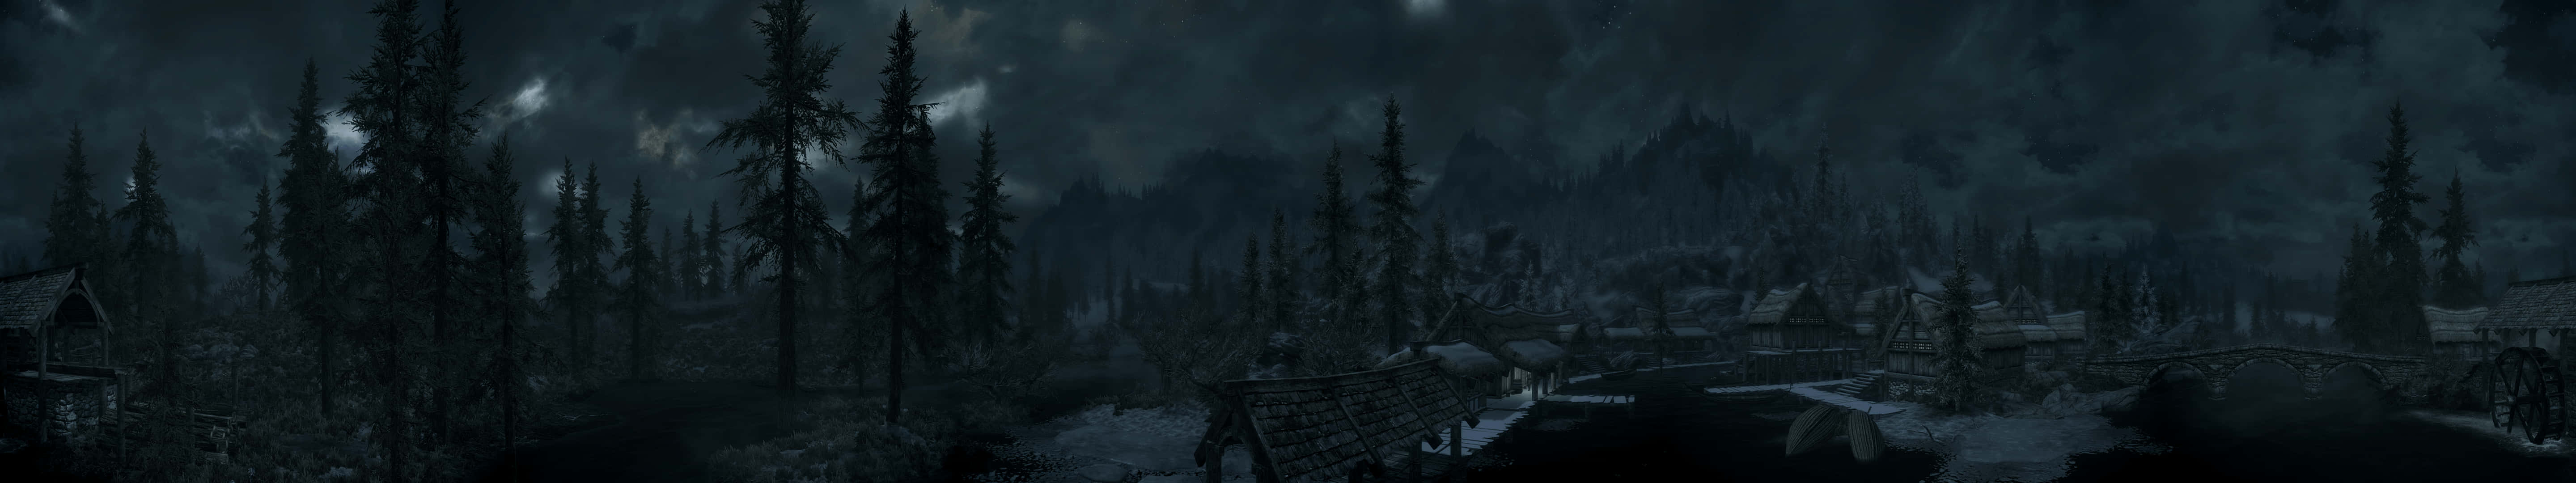 A Dark Night Scene With Trees And A Dark Sky Wallpaper